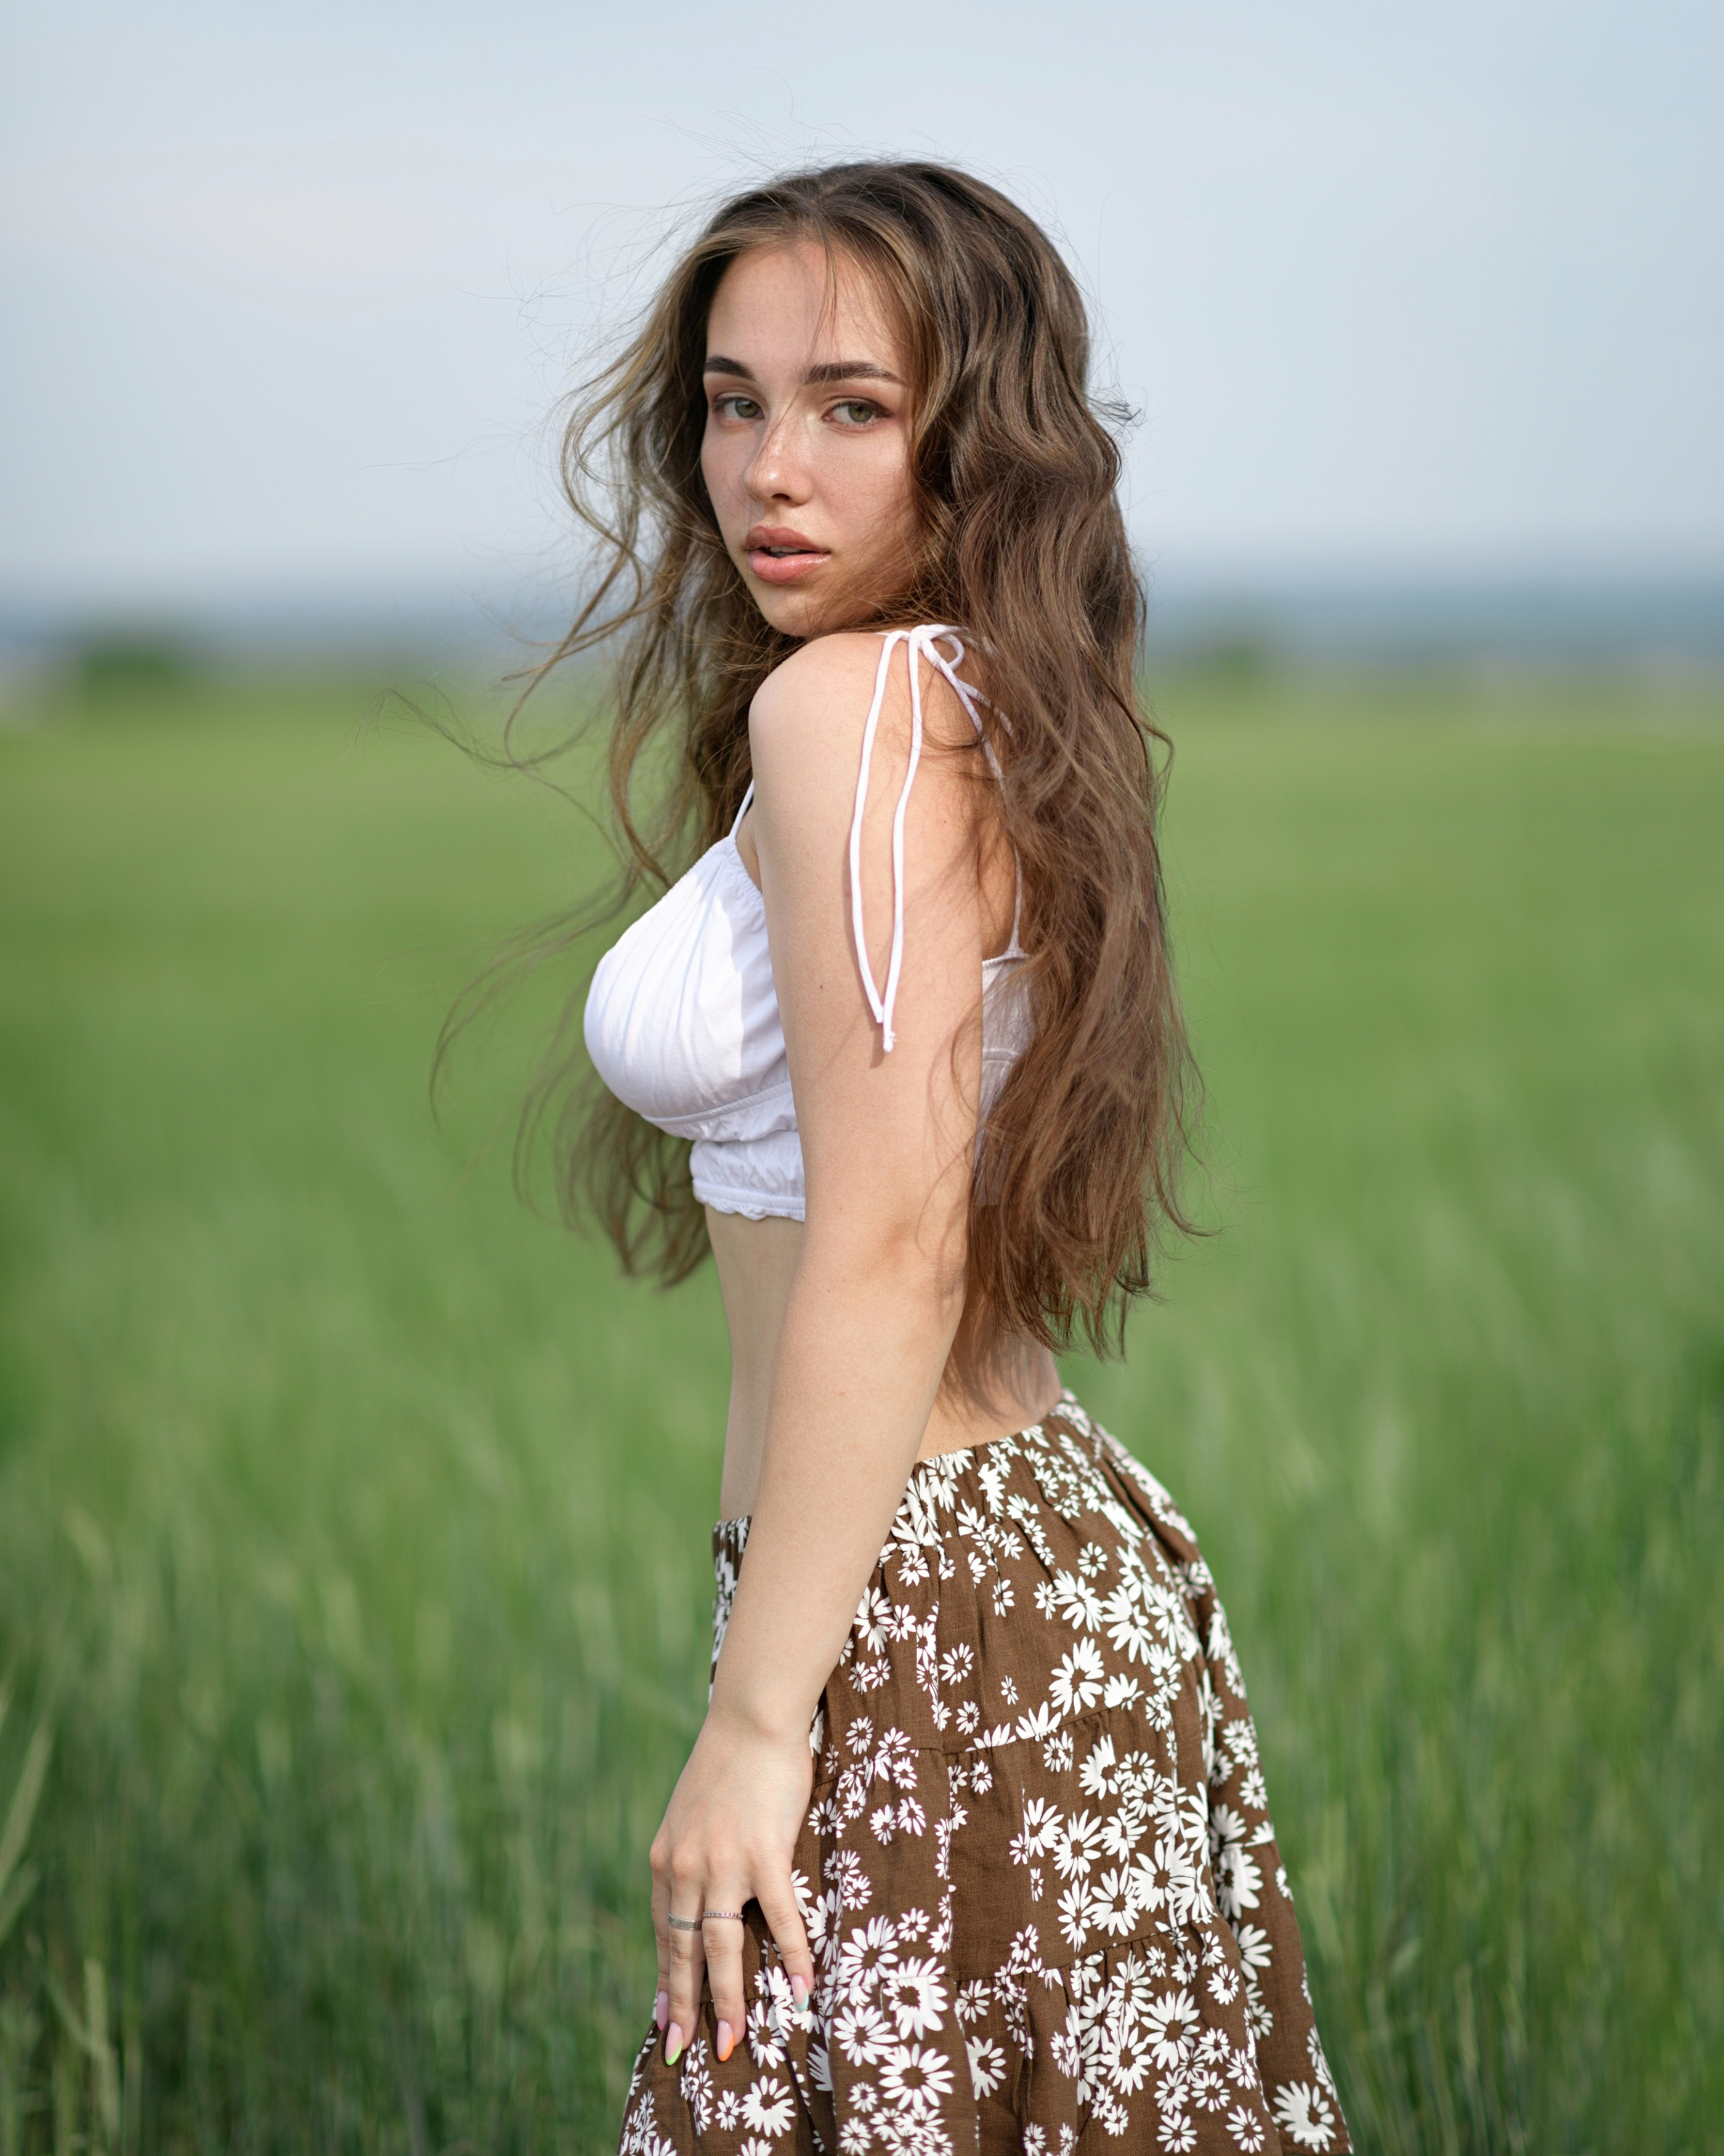 W Darius Women Brunette Long Hair Looking At Viewer Tank Top Skirt Field Grass Thick Eyebrows Model  2799x3500